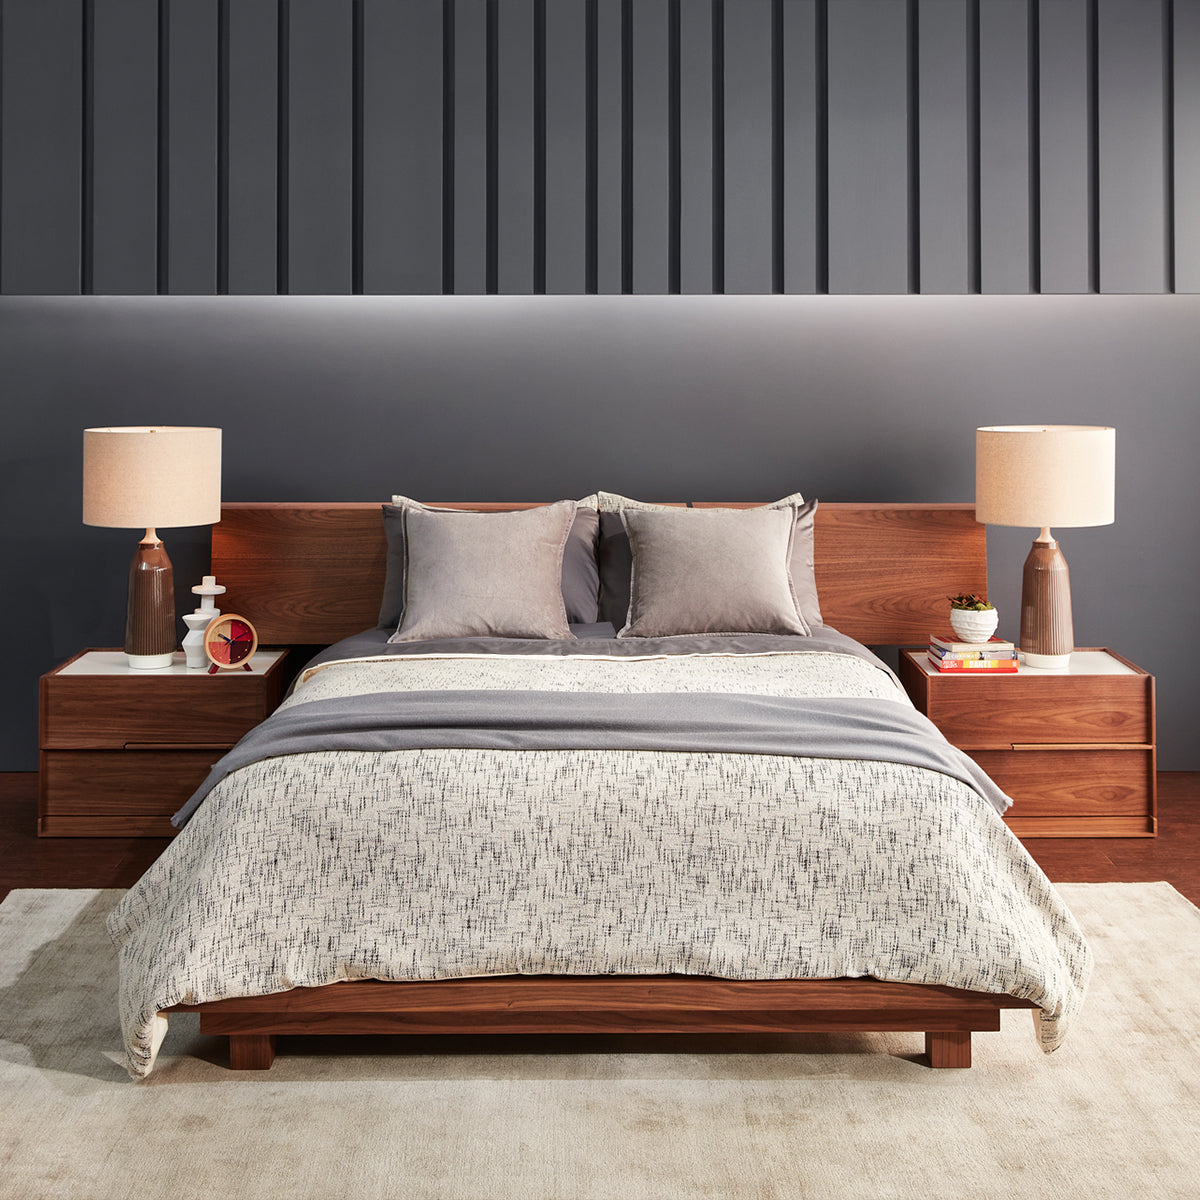 Beautyrest Black C-Class Medium Pillow Top Mattress With Comforter And Pillows In Bedroom